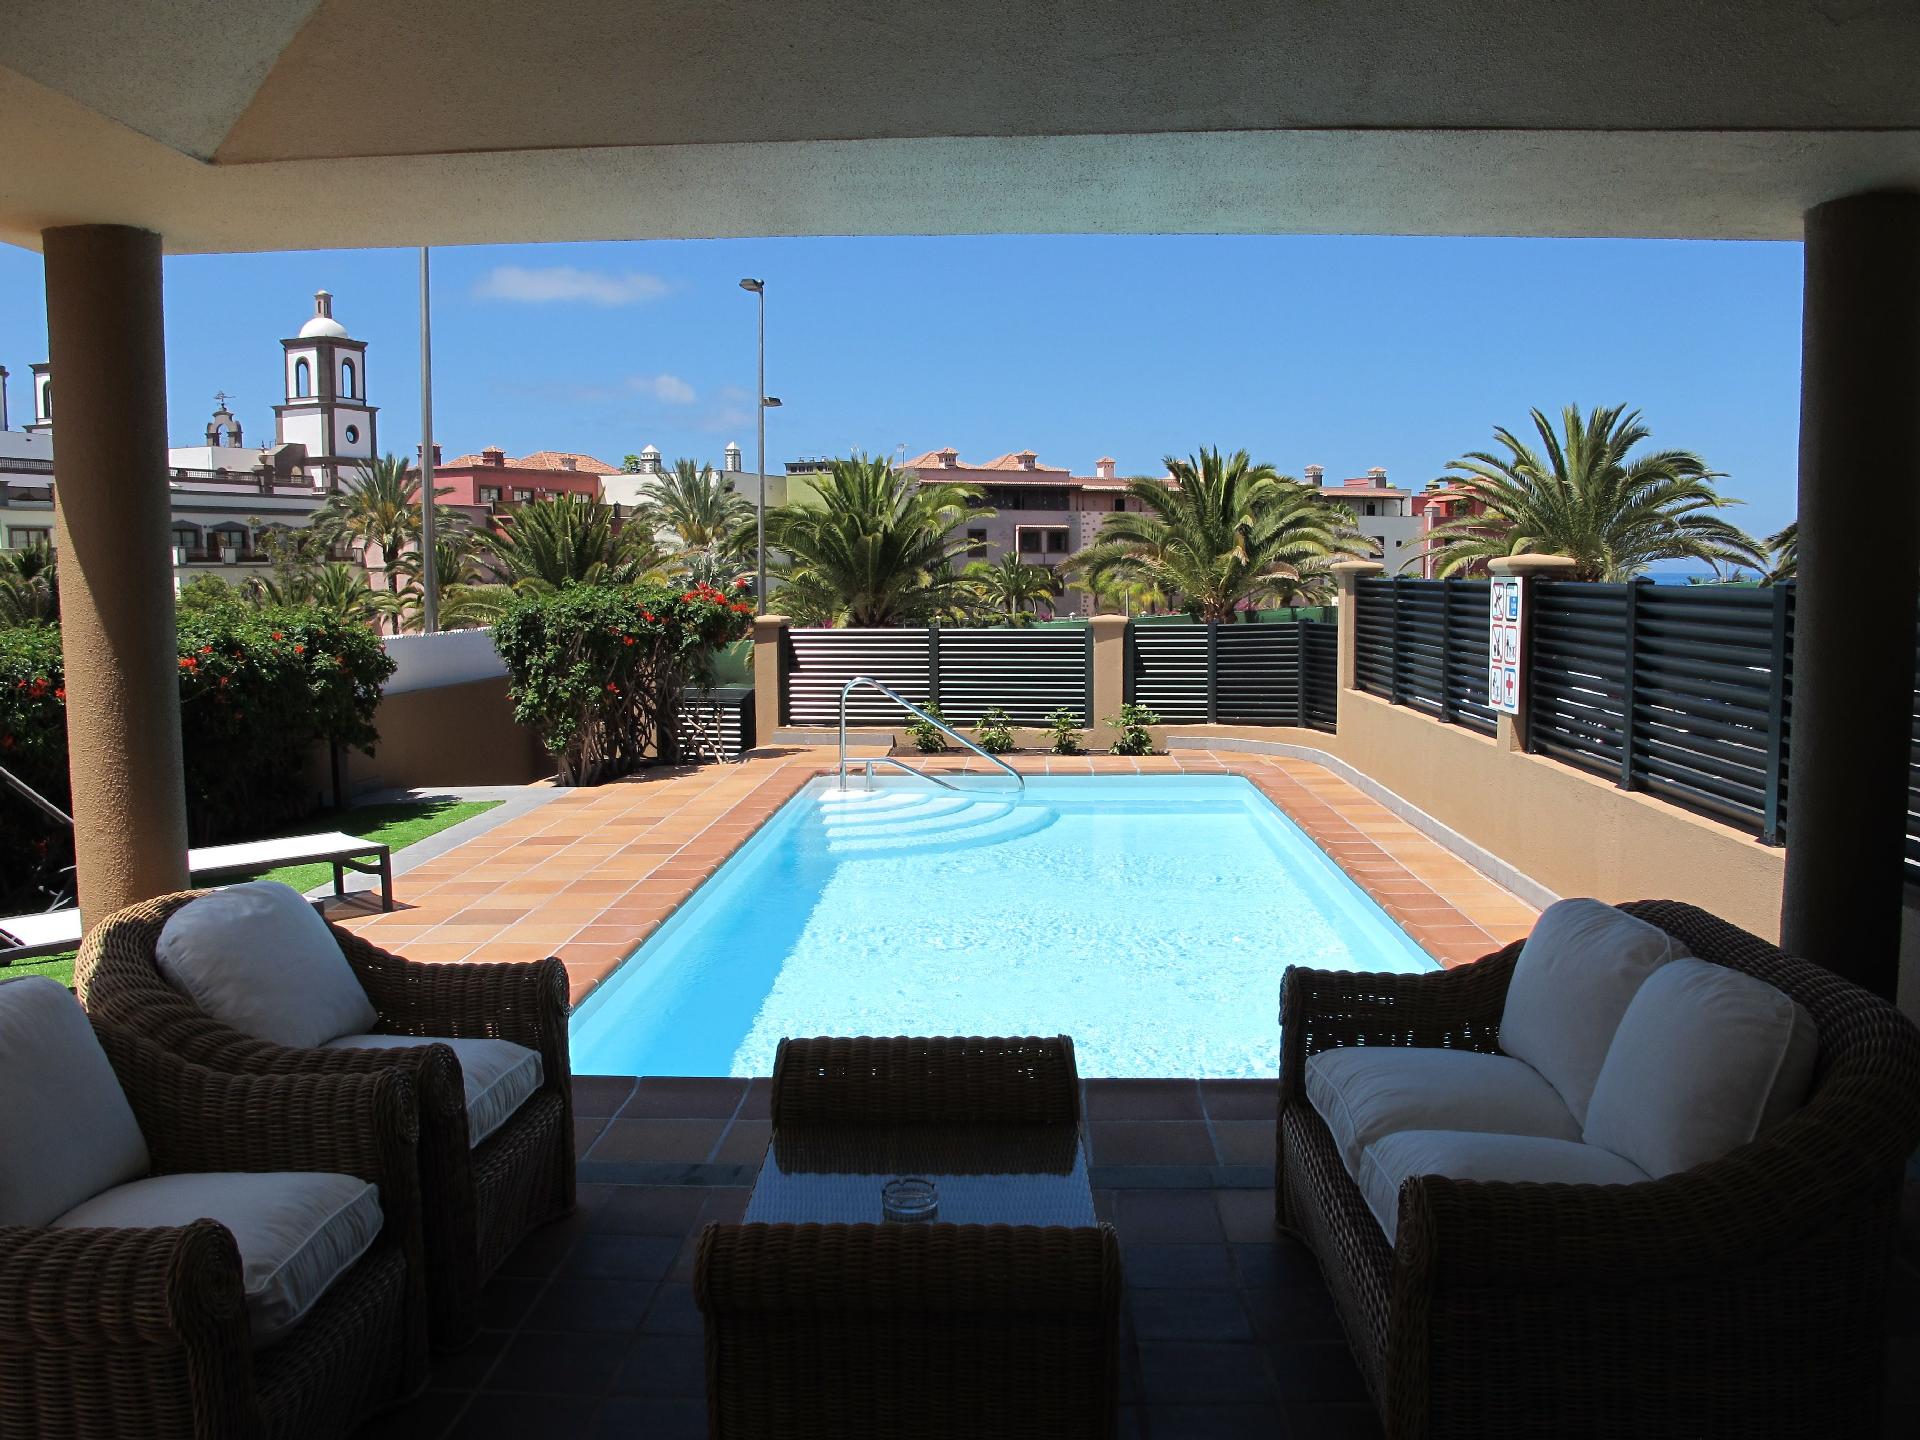 Neu erbaute umfriedete Ferienvilla nahe Strand und Ferienhaus  Gran Canaria